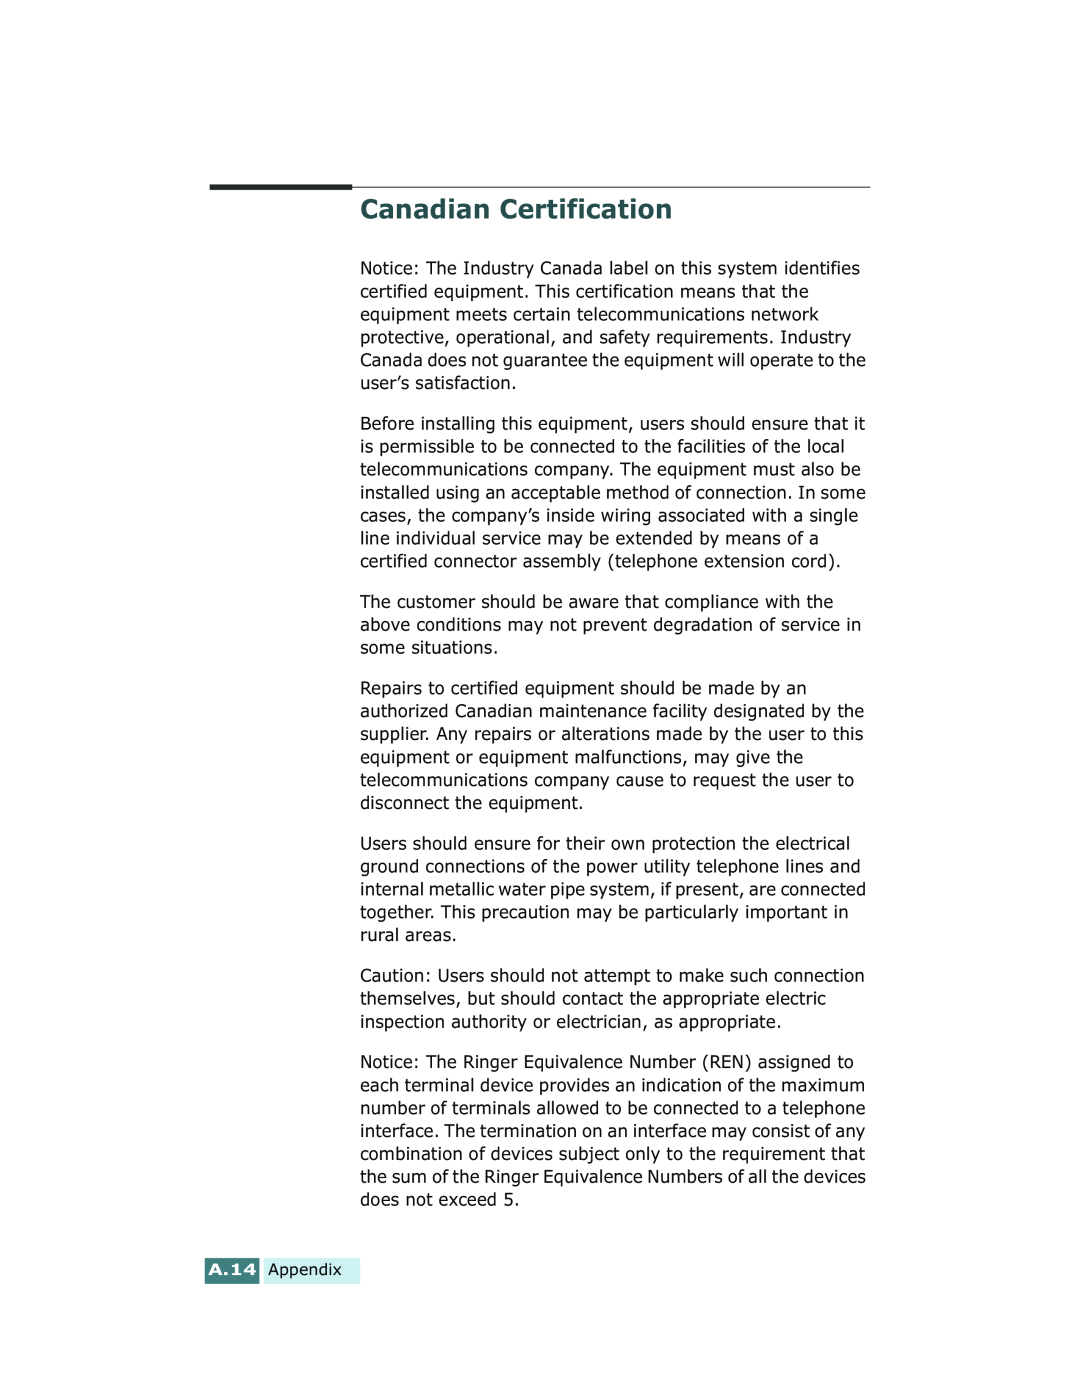 Xerox Pro 580 manual Canadian Certification 